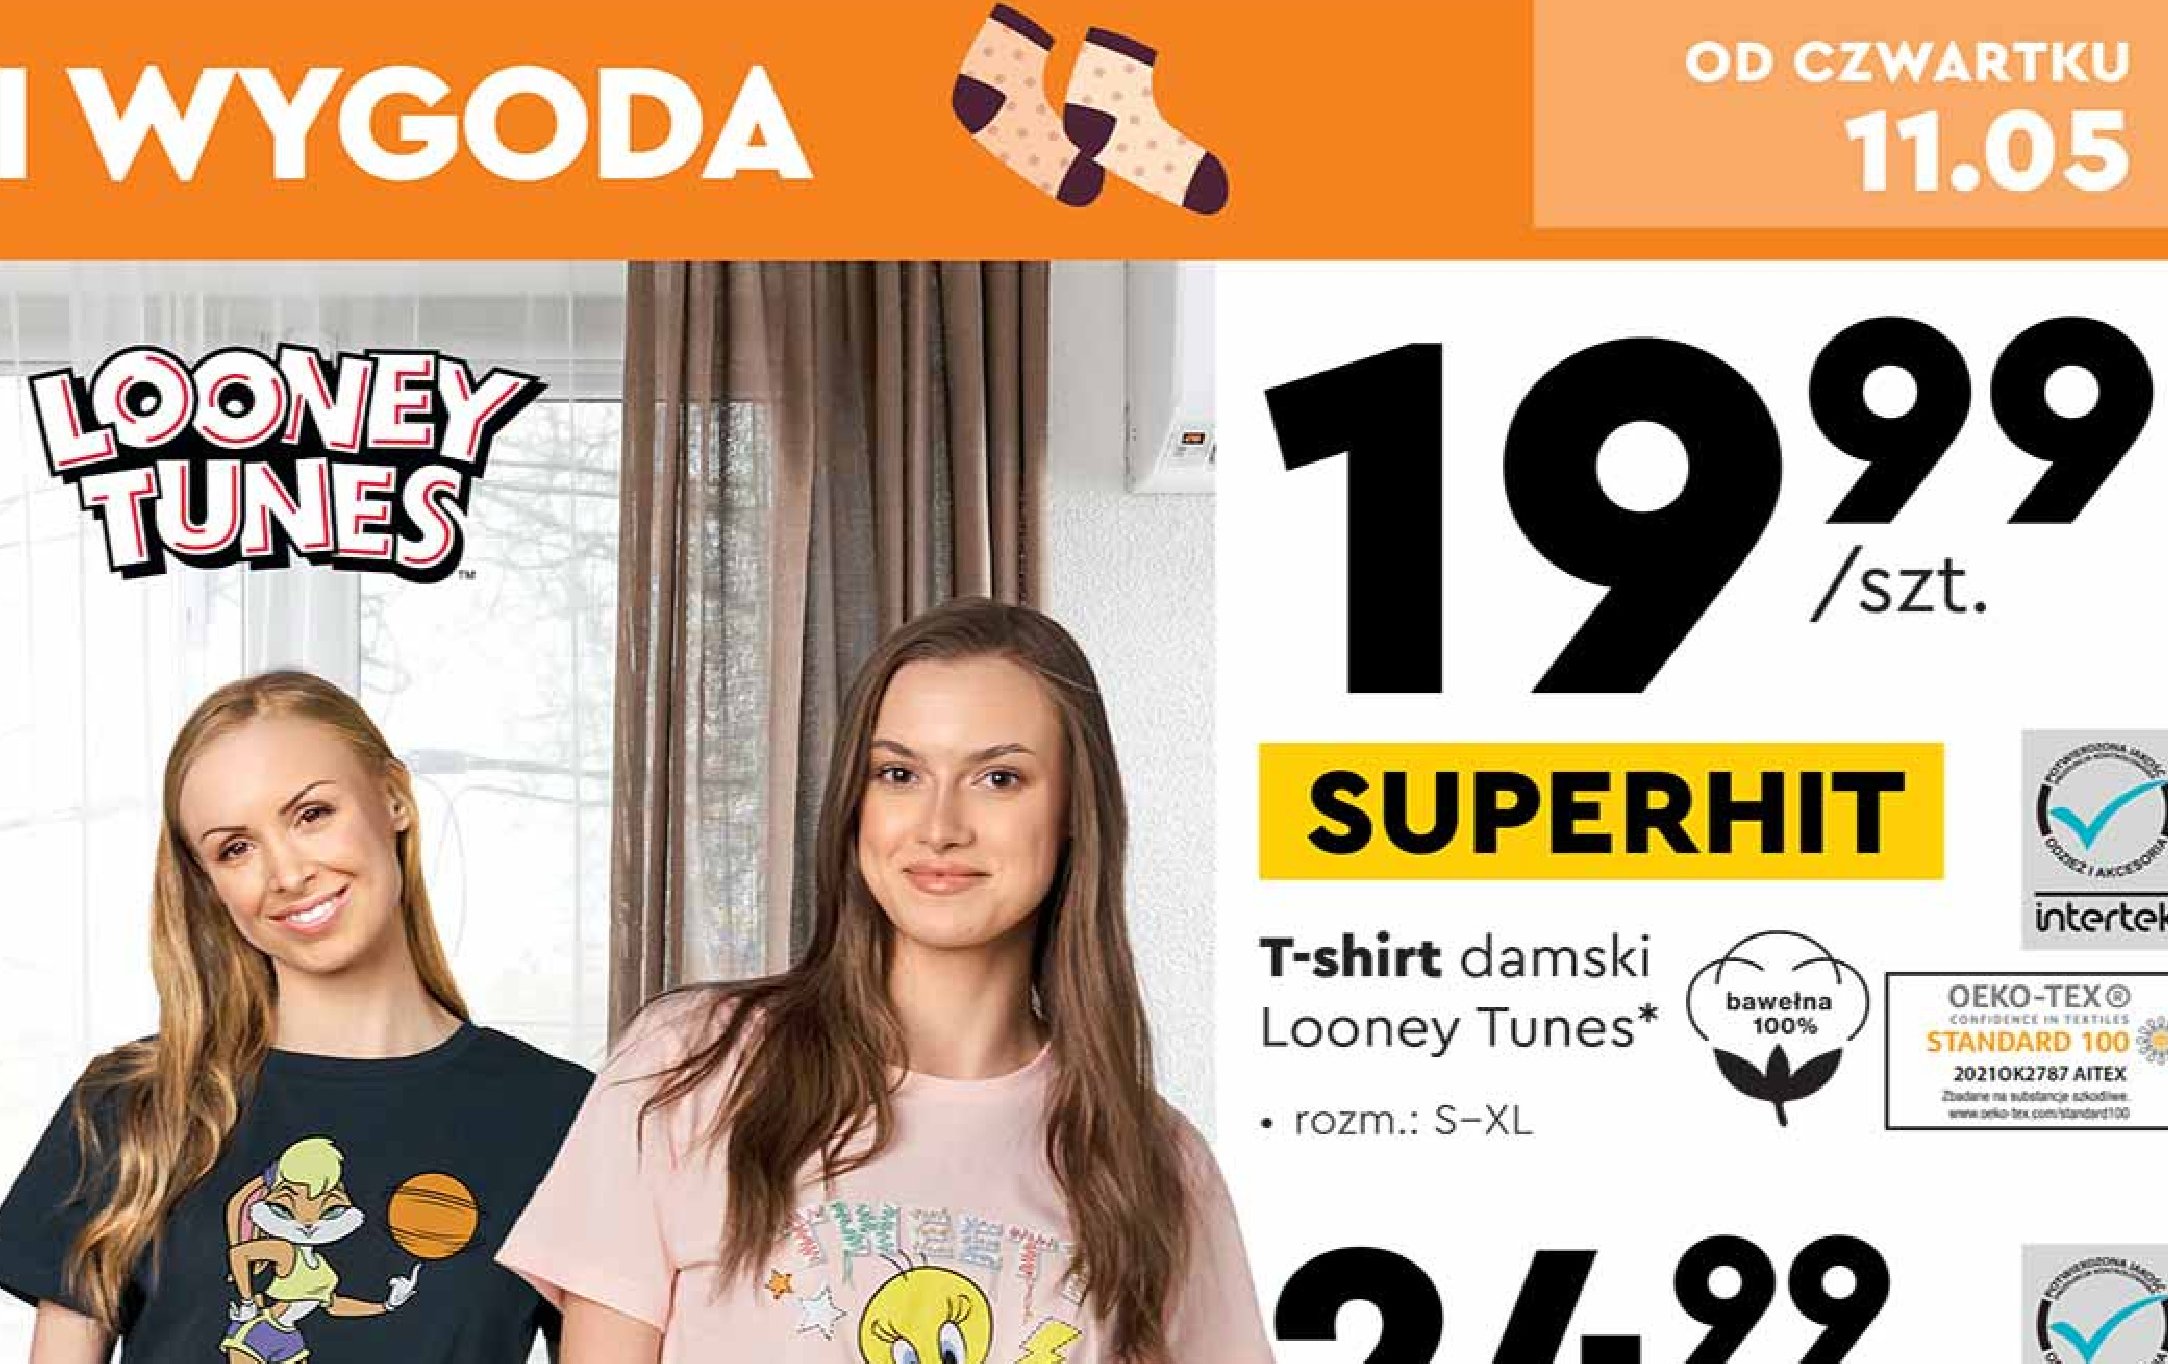 T- shirt damski s-xl looney tunes promocja